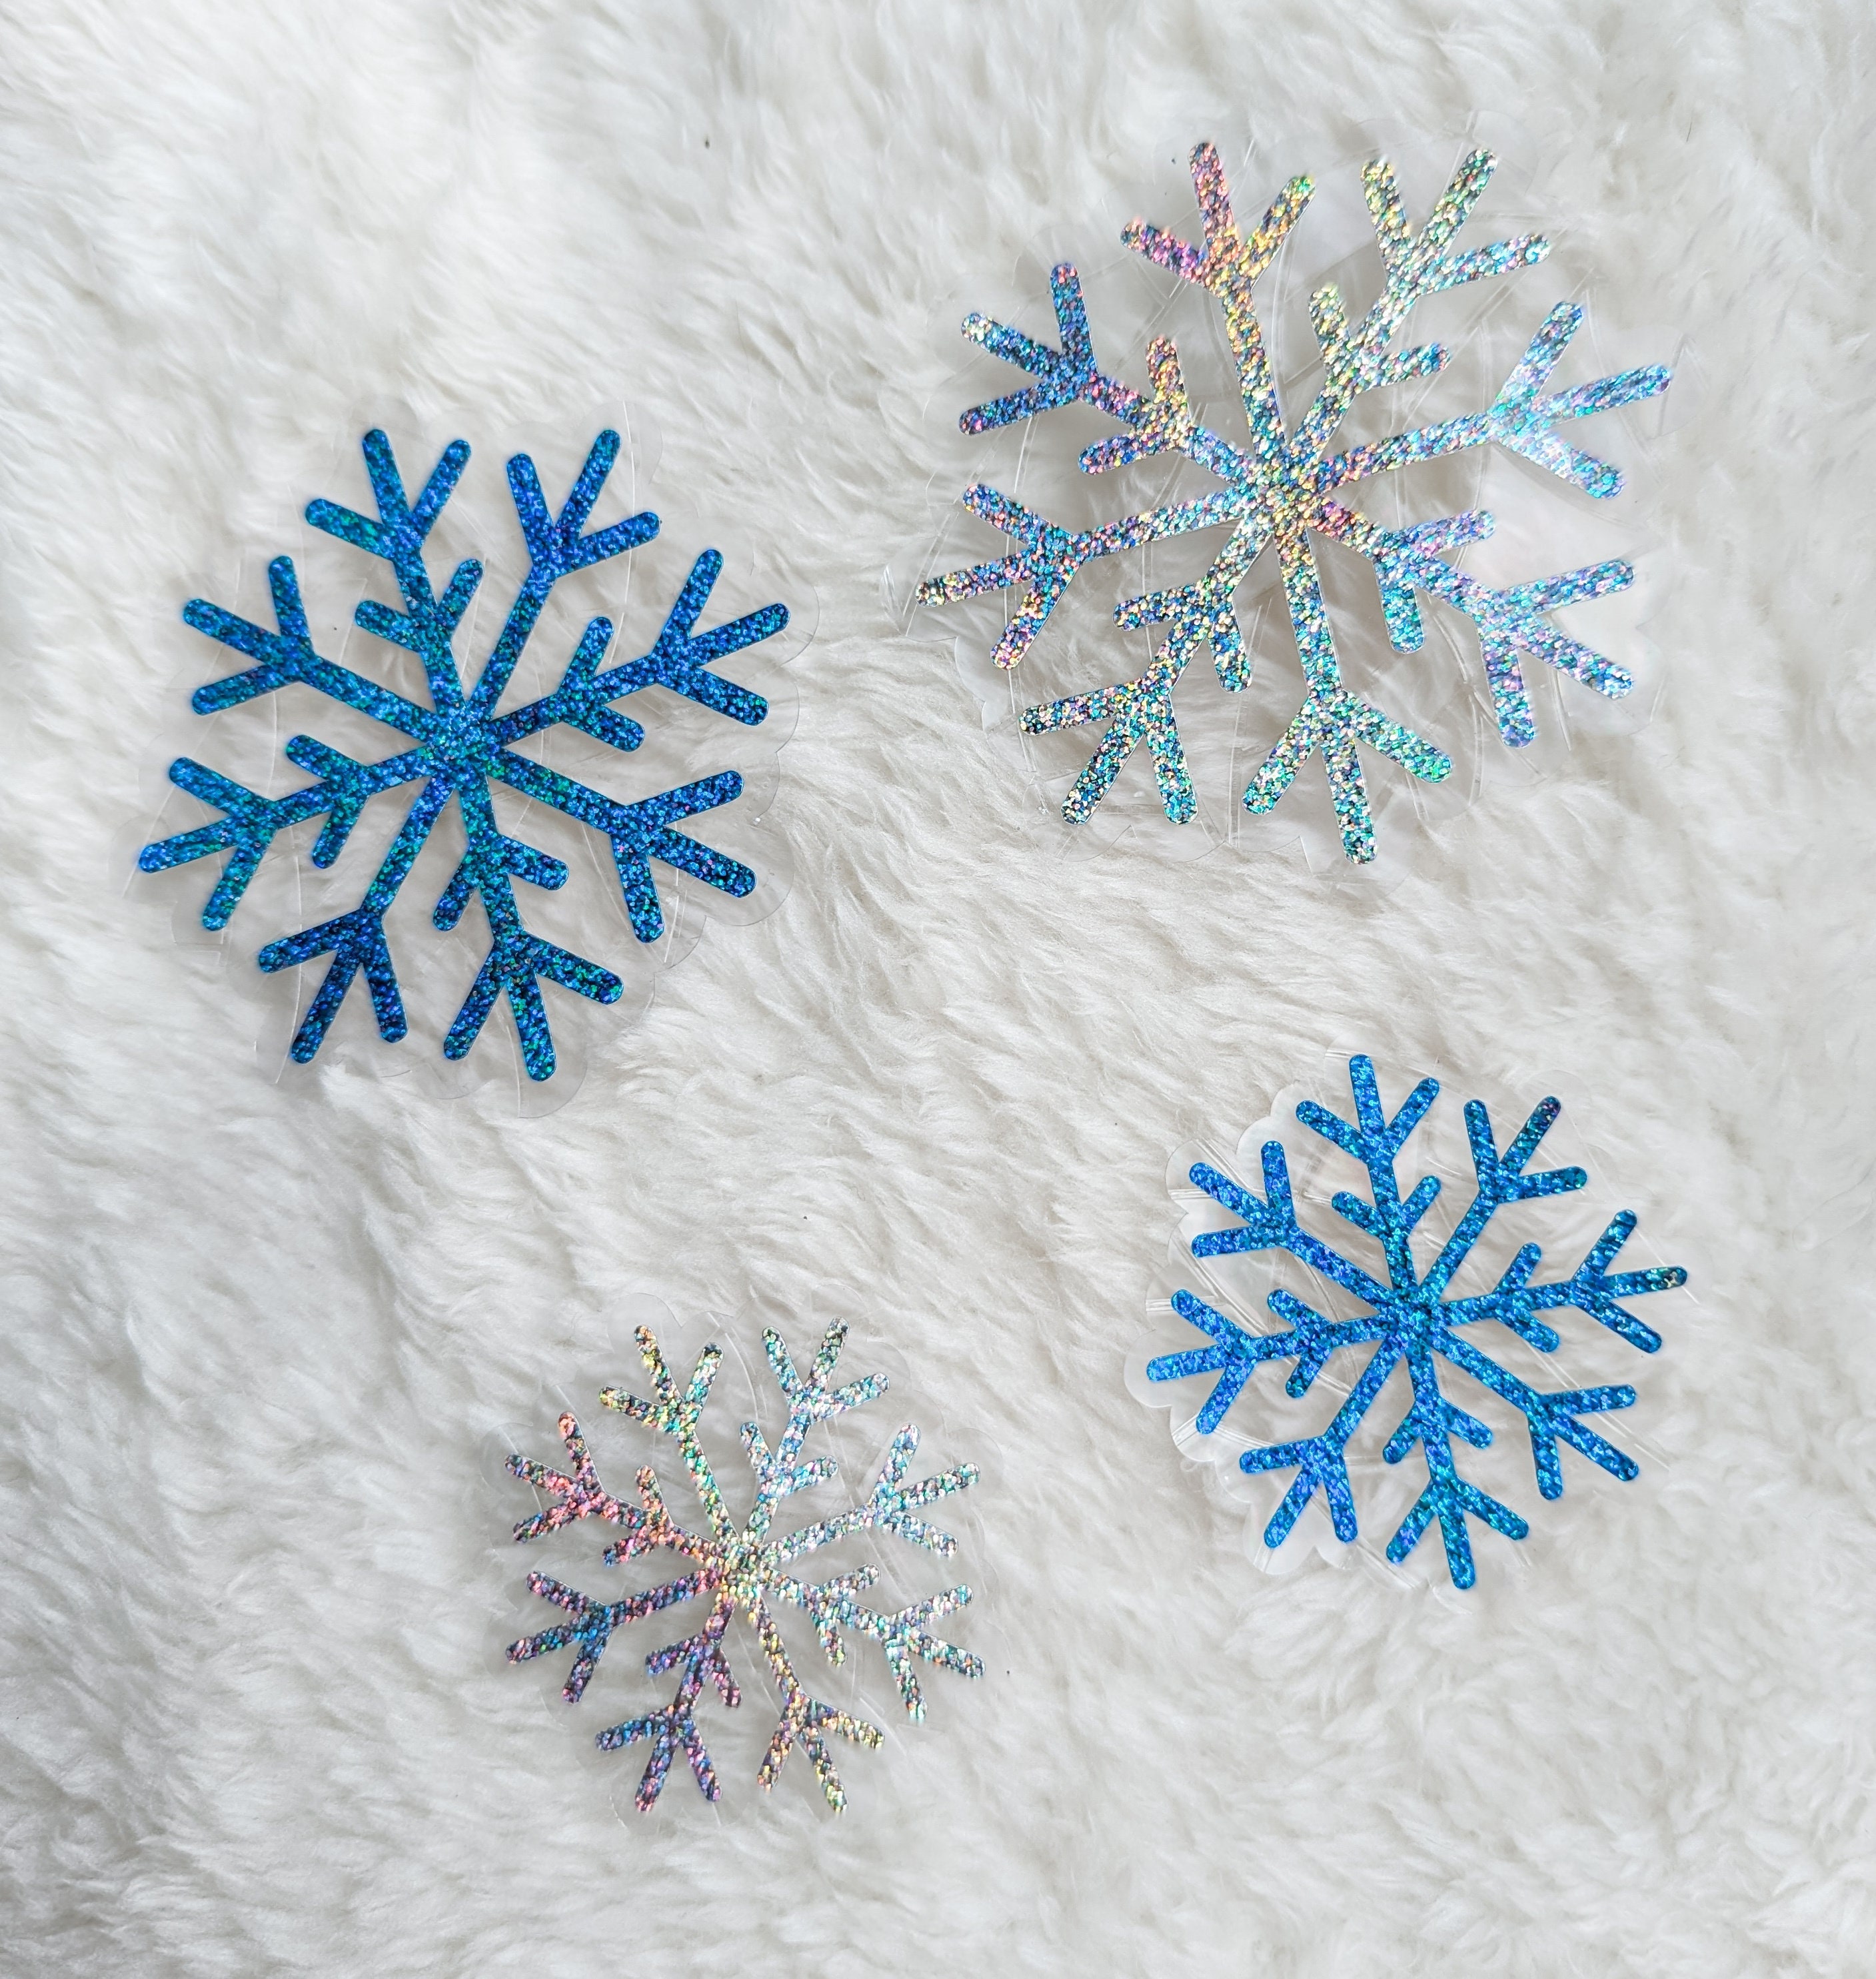 Snowflake Suncatcher Window Decal Set of 4, Winter Craft Kit for